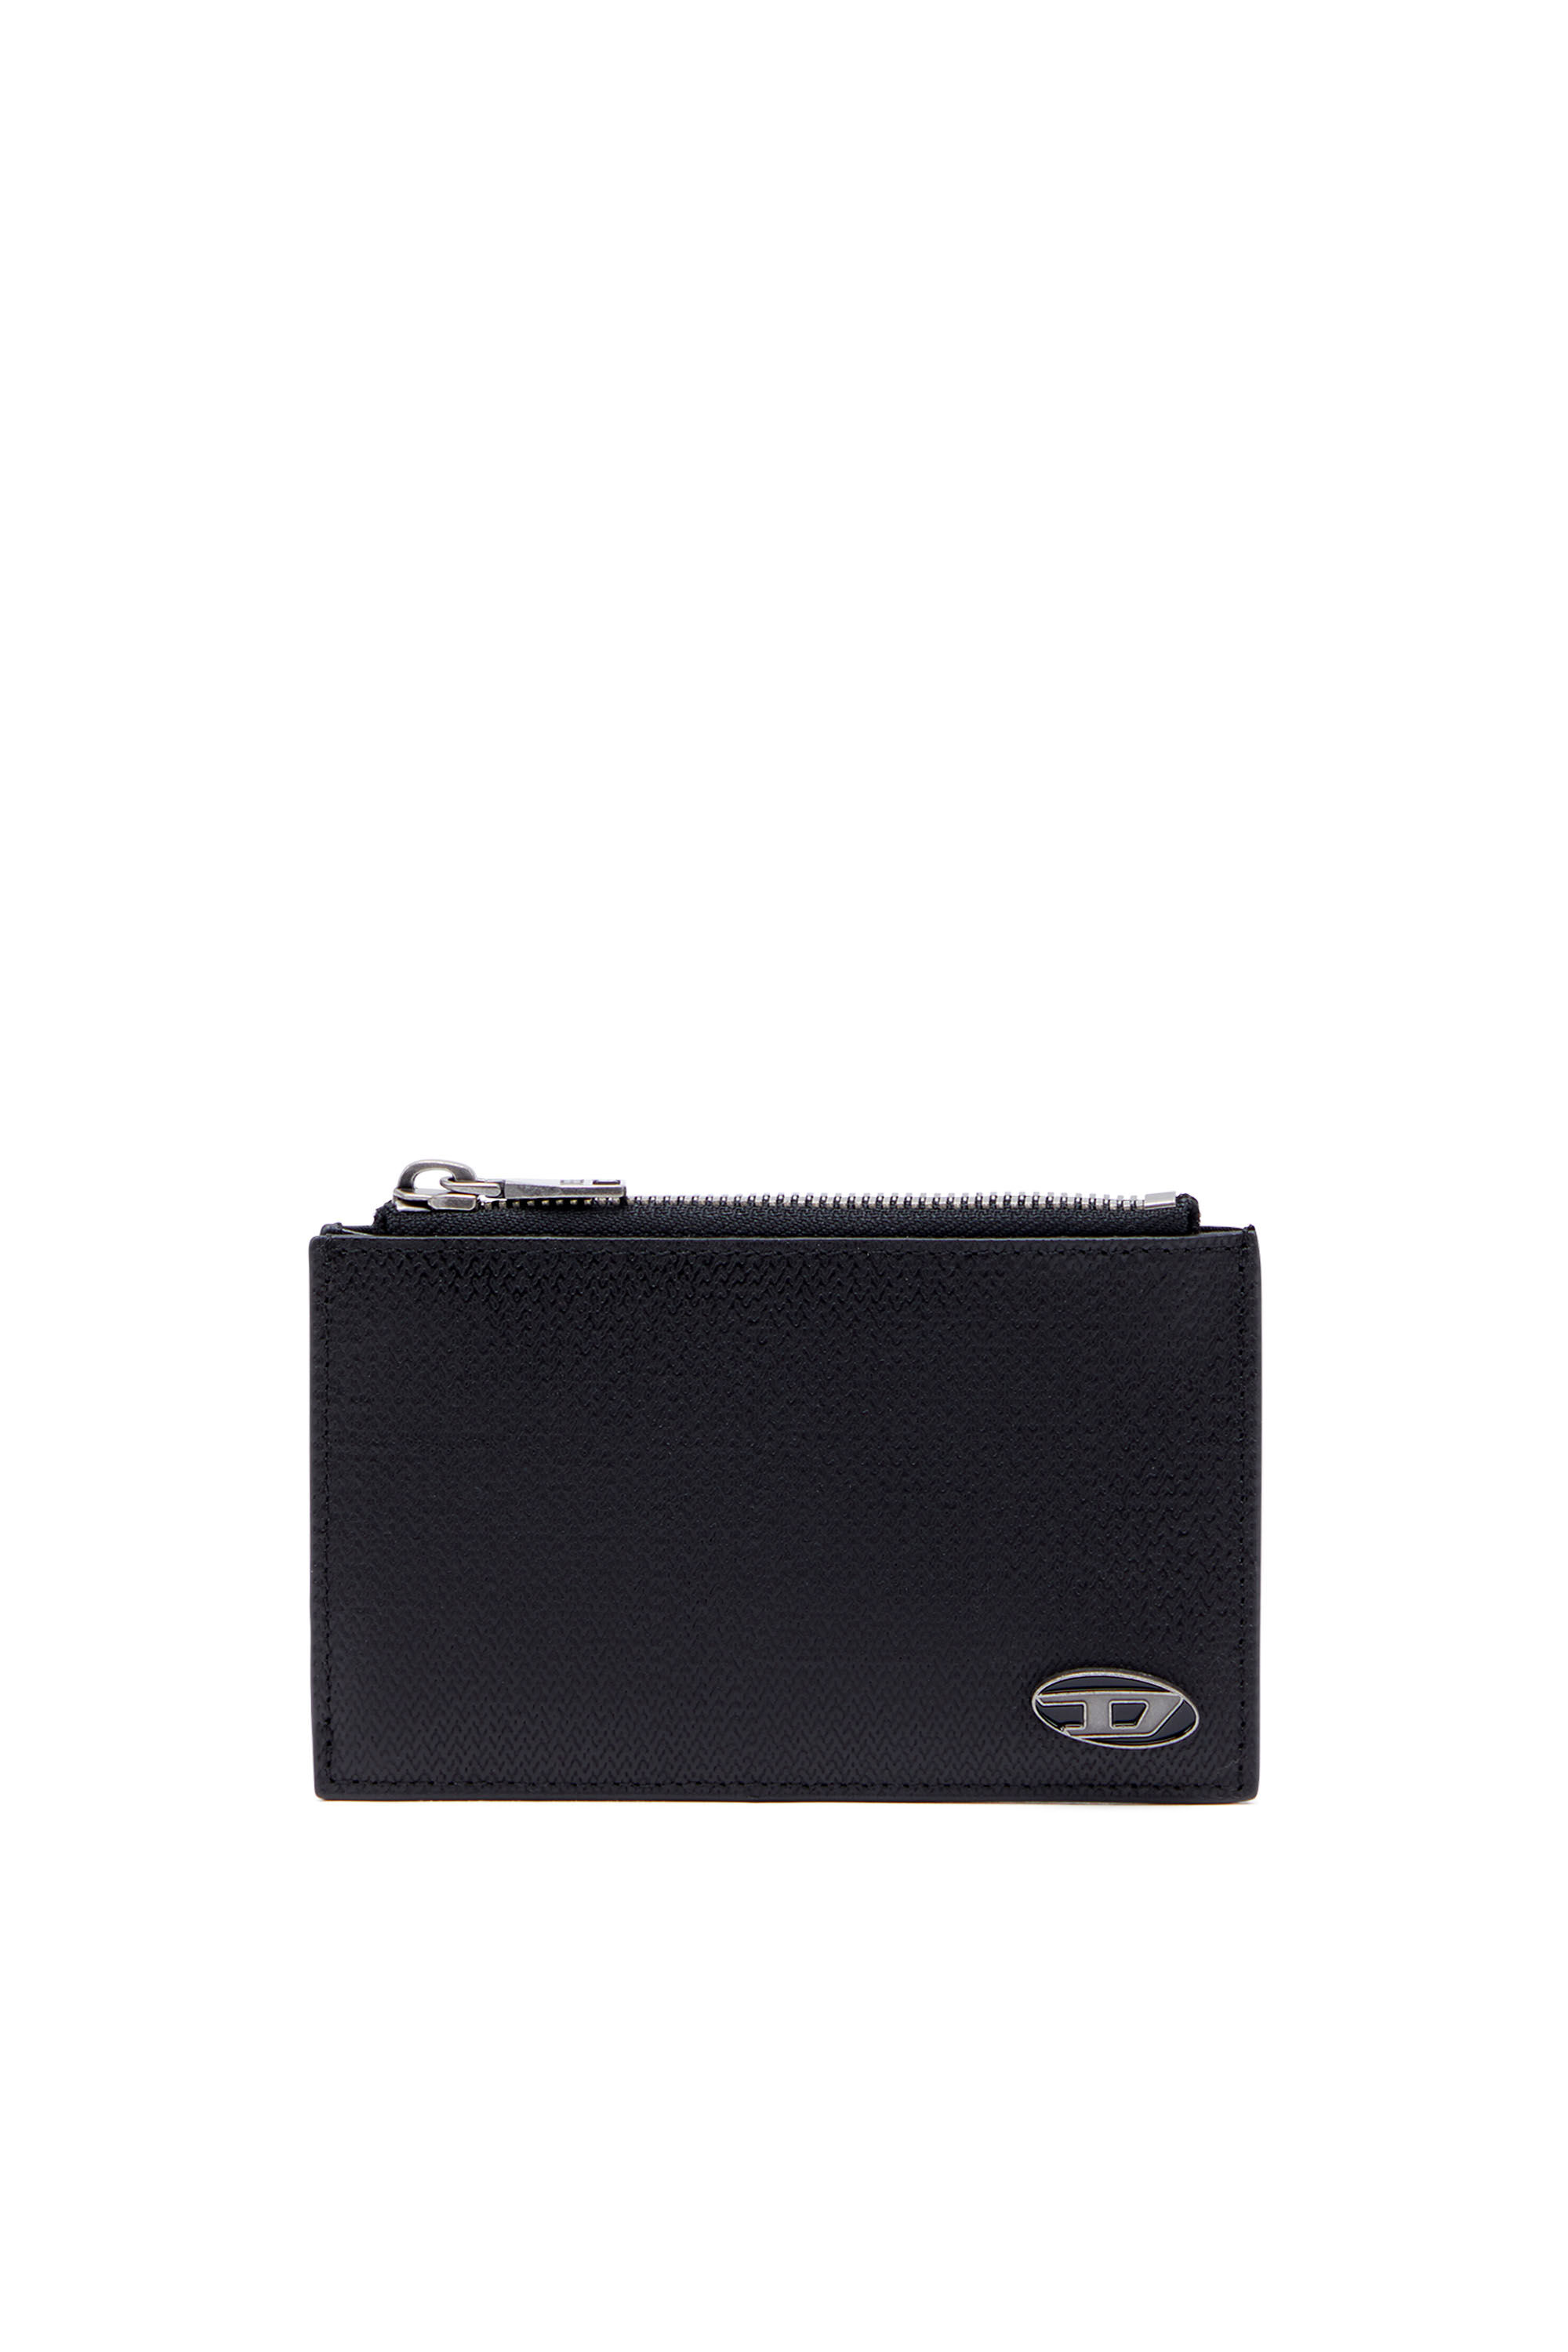 Diesel - CARD HOLDER COIN M, Man Slim card holder in textured leather in Black - Image 1